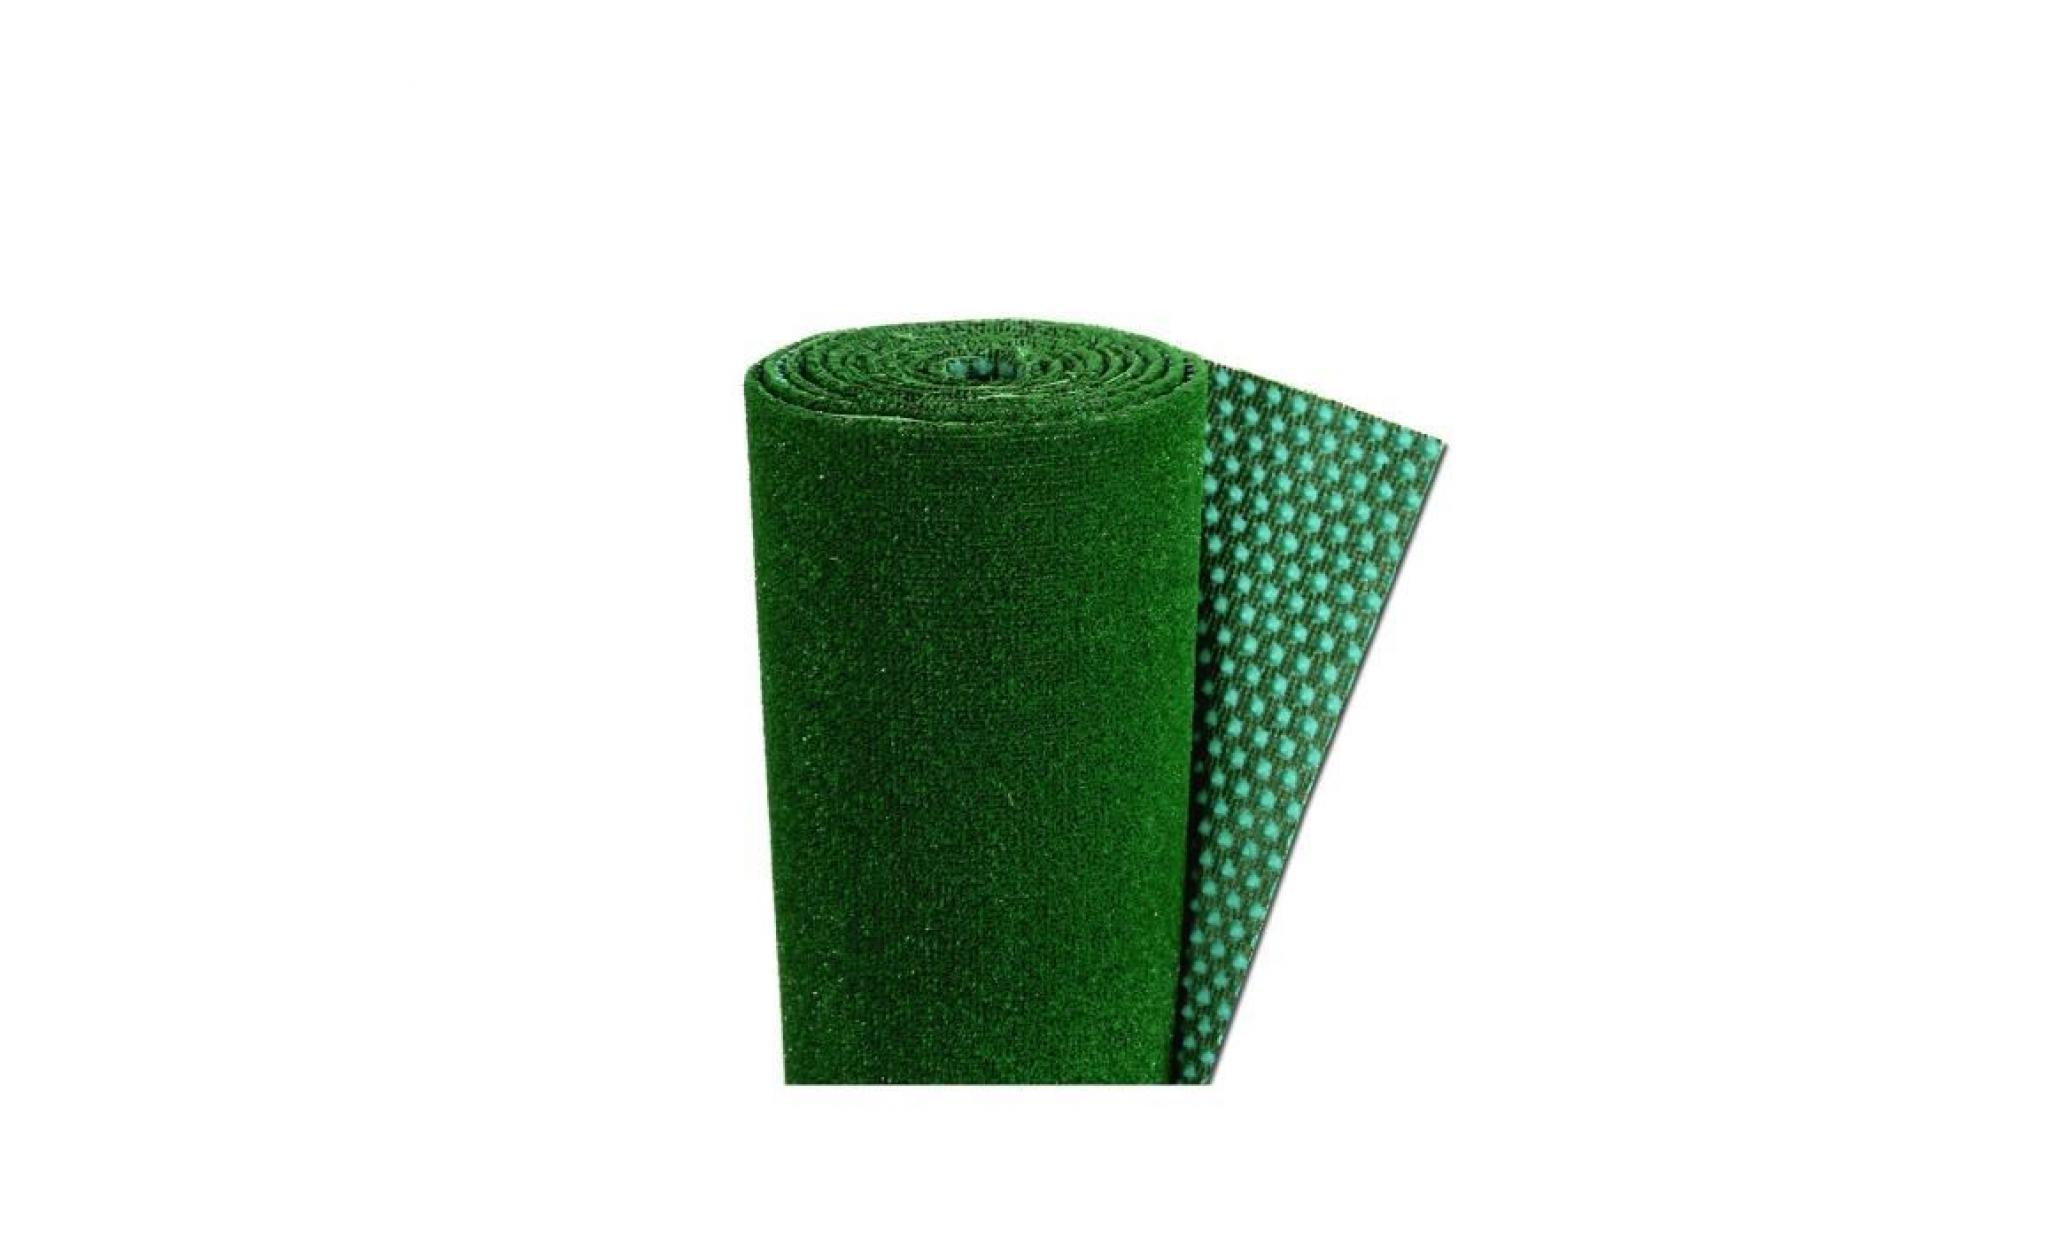 york   tapis type gazon artificiel avec nubs – pour jardin, terrasse, balcon   vert   [200x250 cm] pas cher